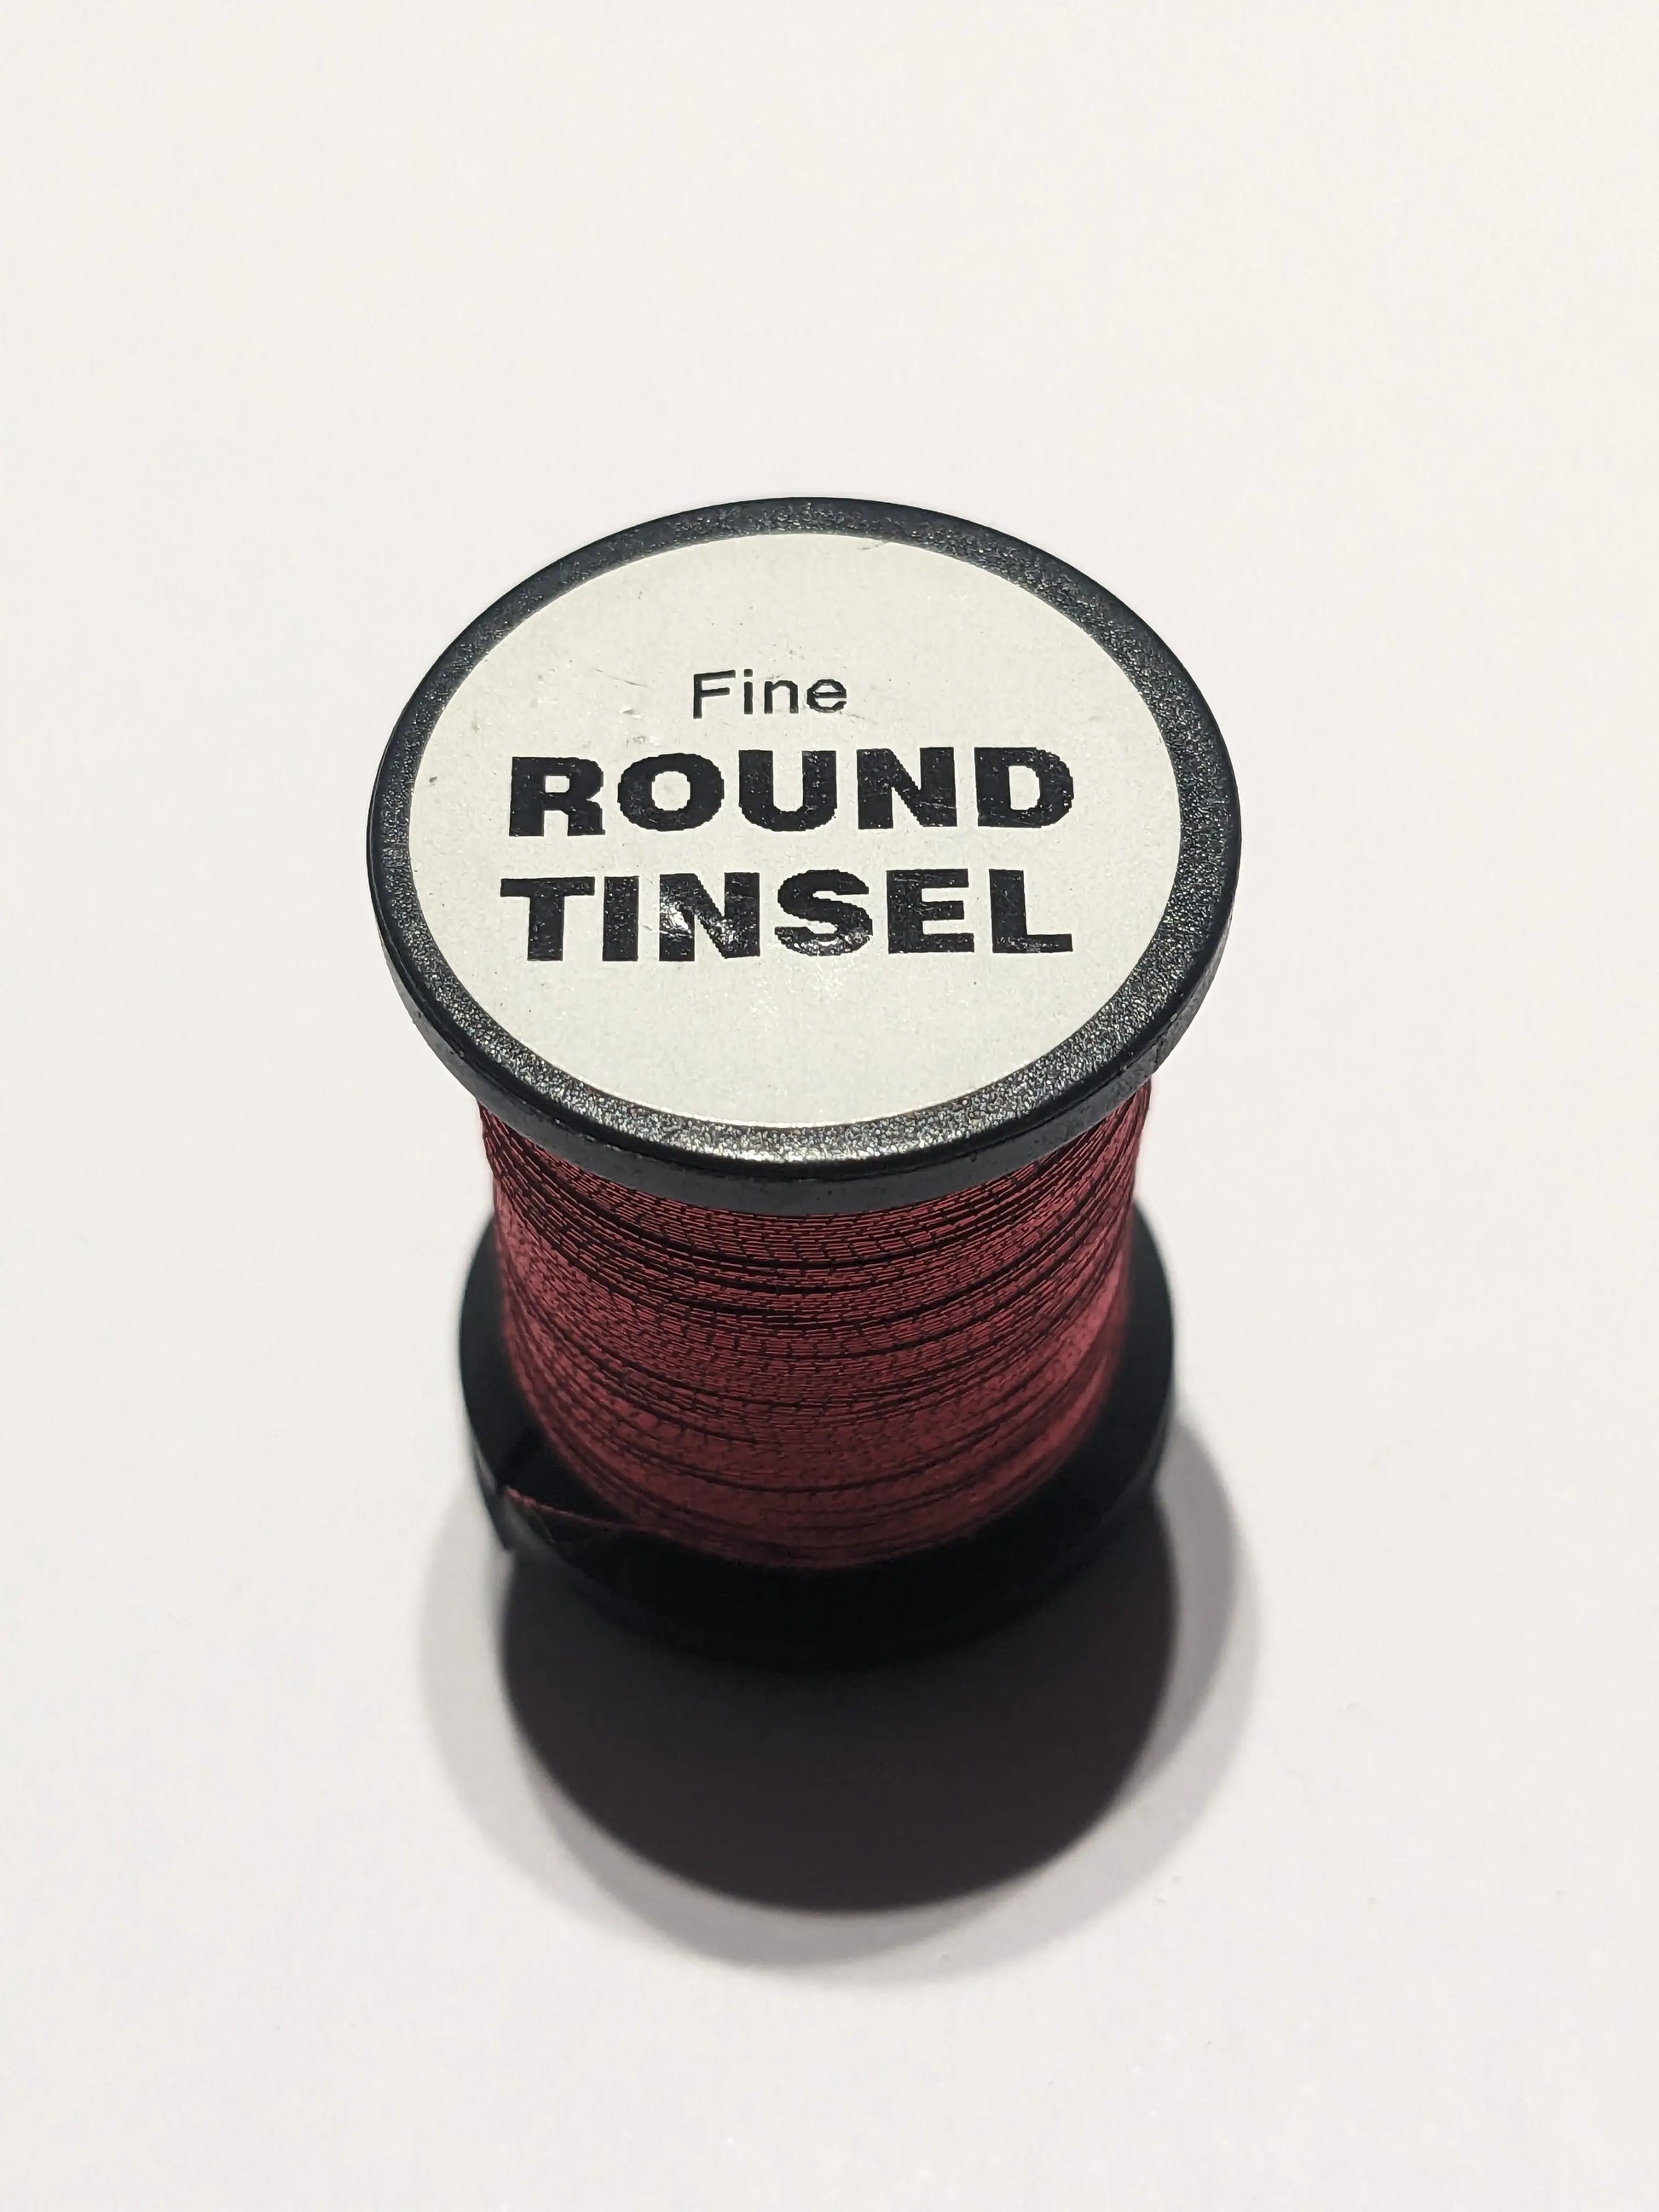 Uni-Thread |  Uni-Floss | Micro-Tinsel for Fly Tying - www.nafni.com